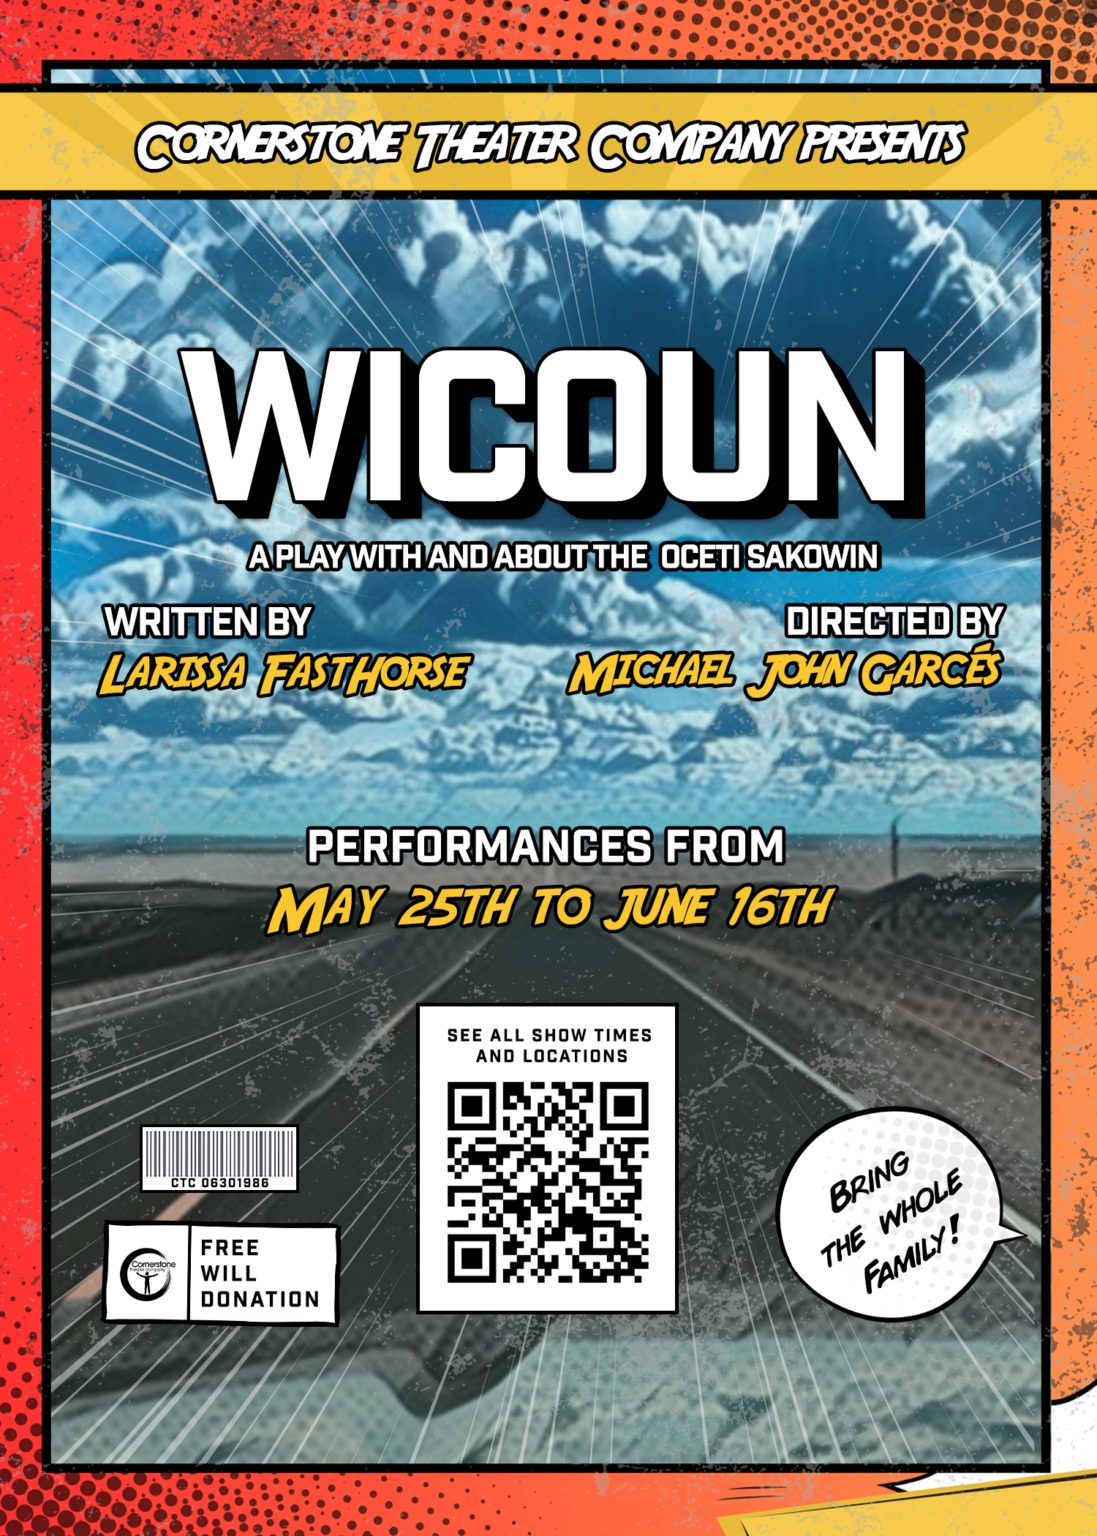 Wicoun theater poster.